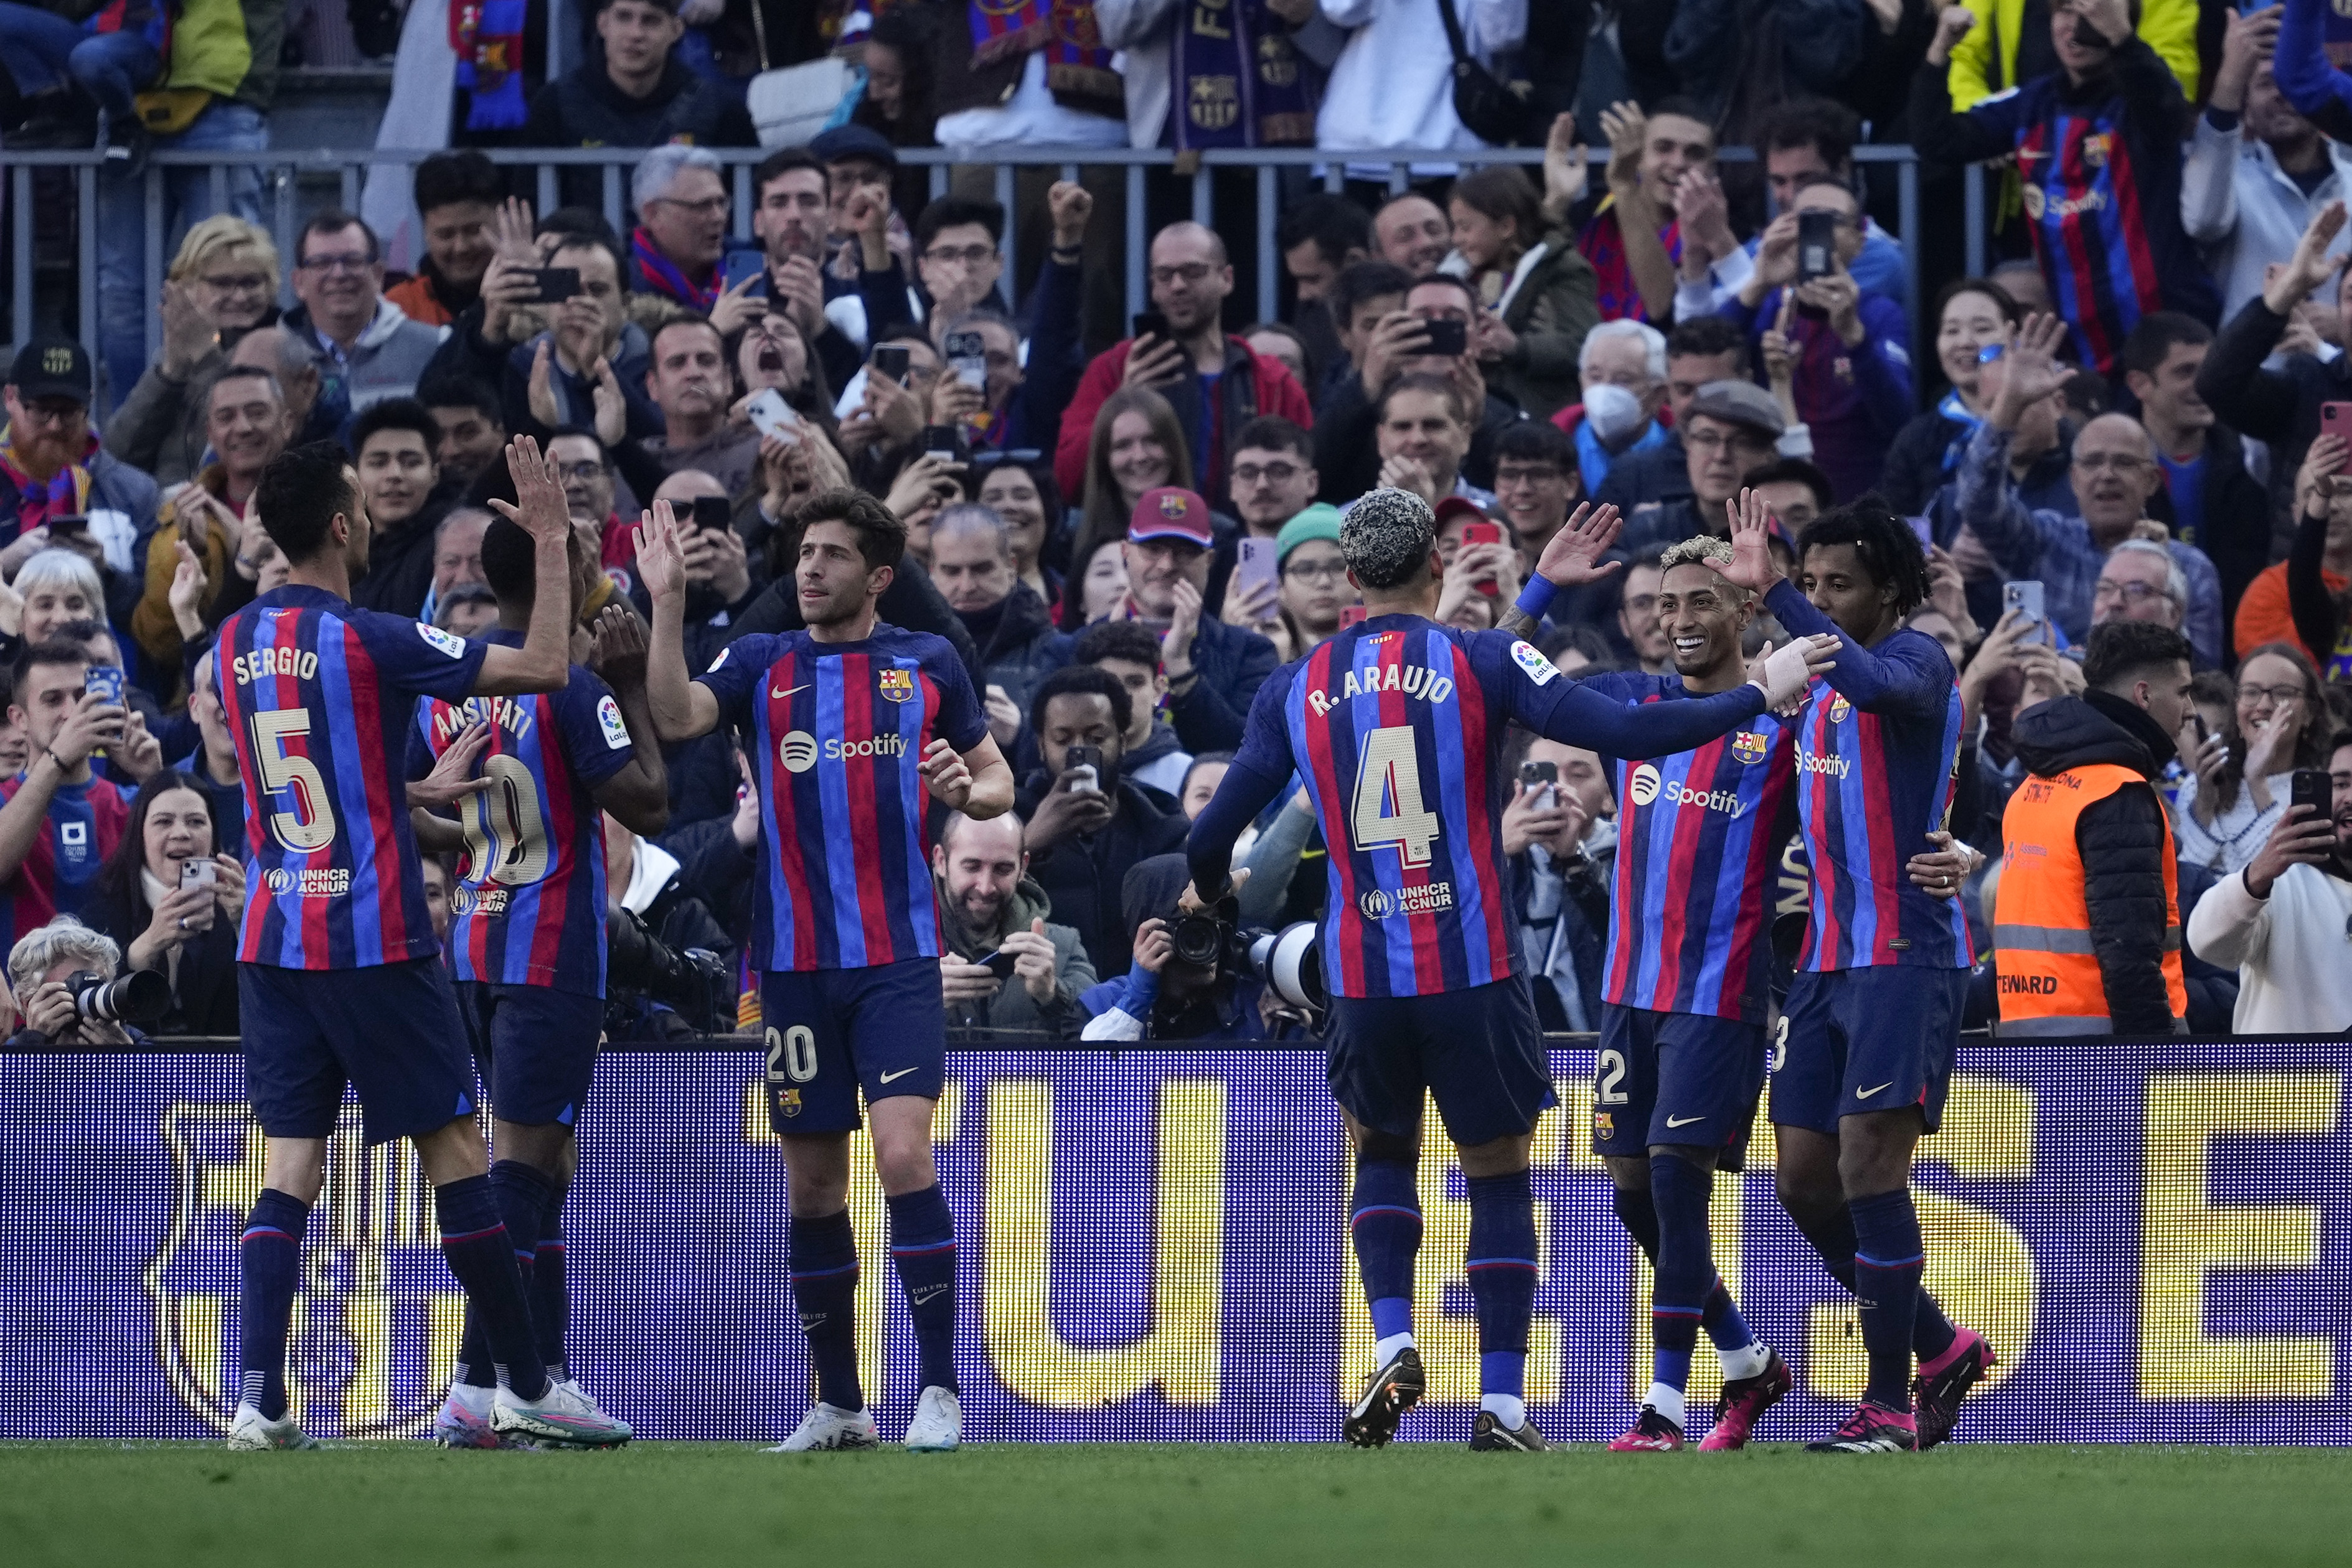 El FC Barcelona de Xavi ganó de forma sufrida en el Camp Nou. Foto Prensa Libre (LaLiga)